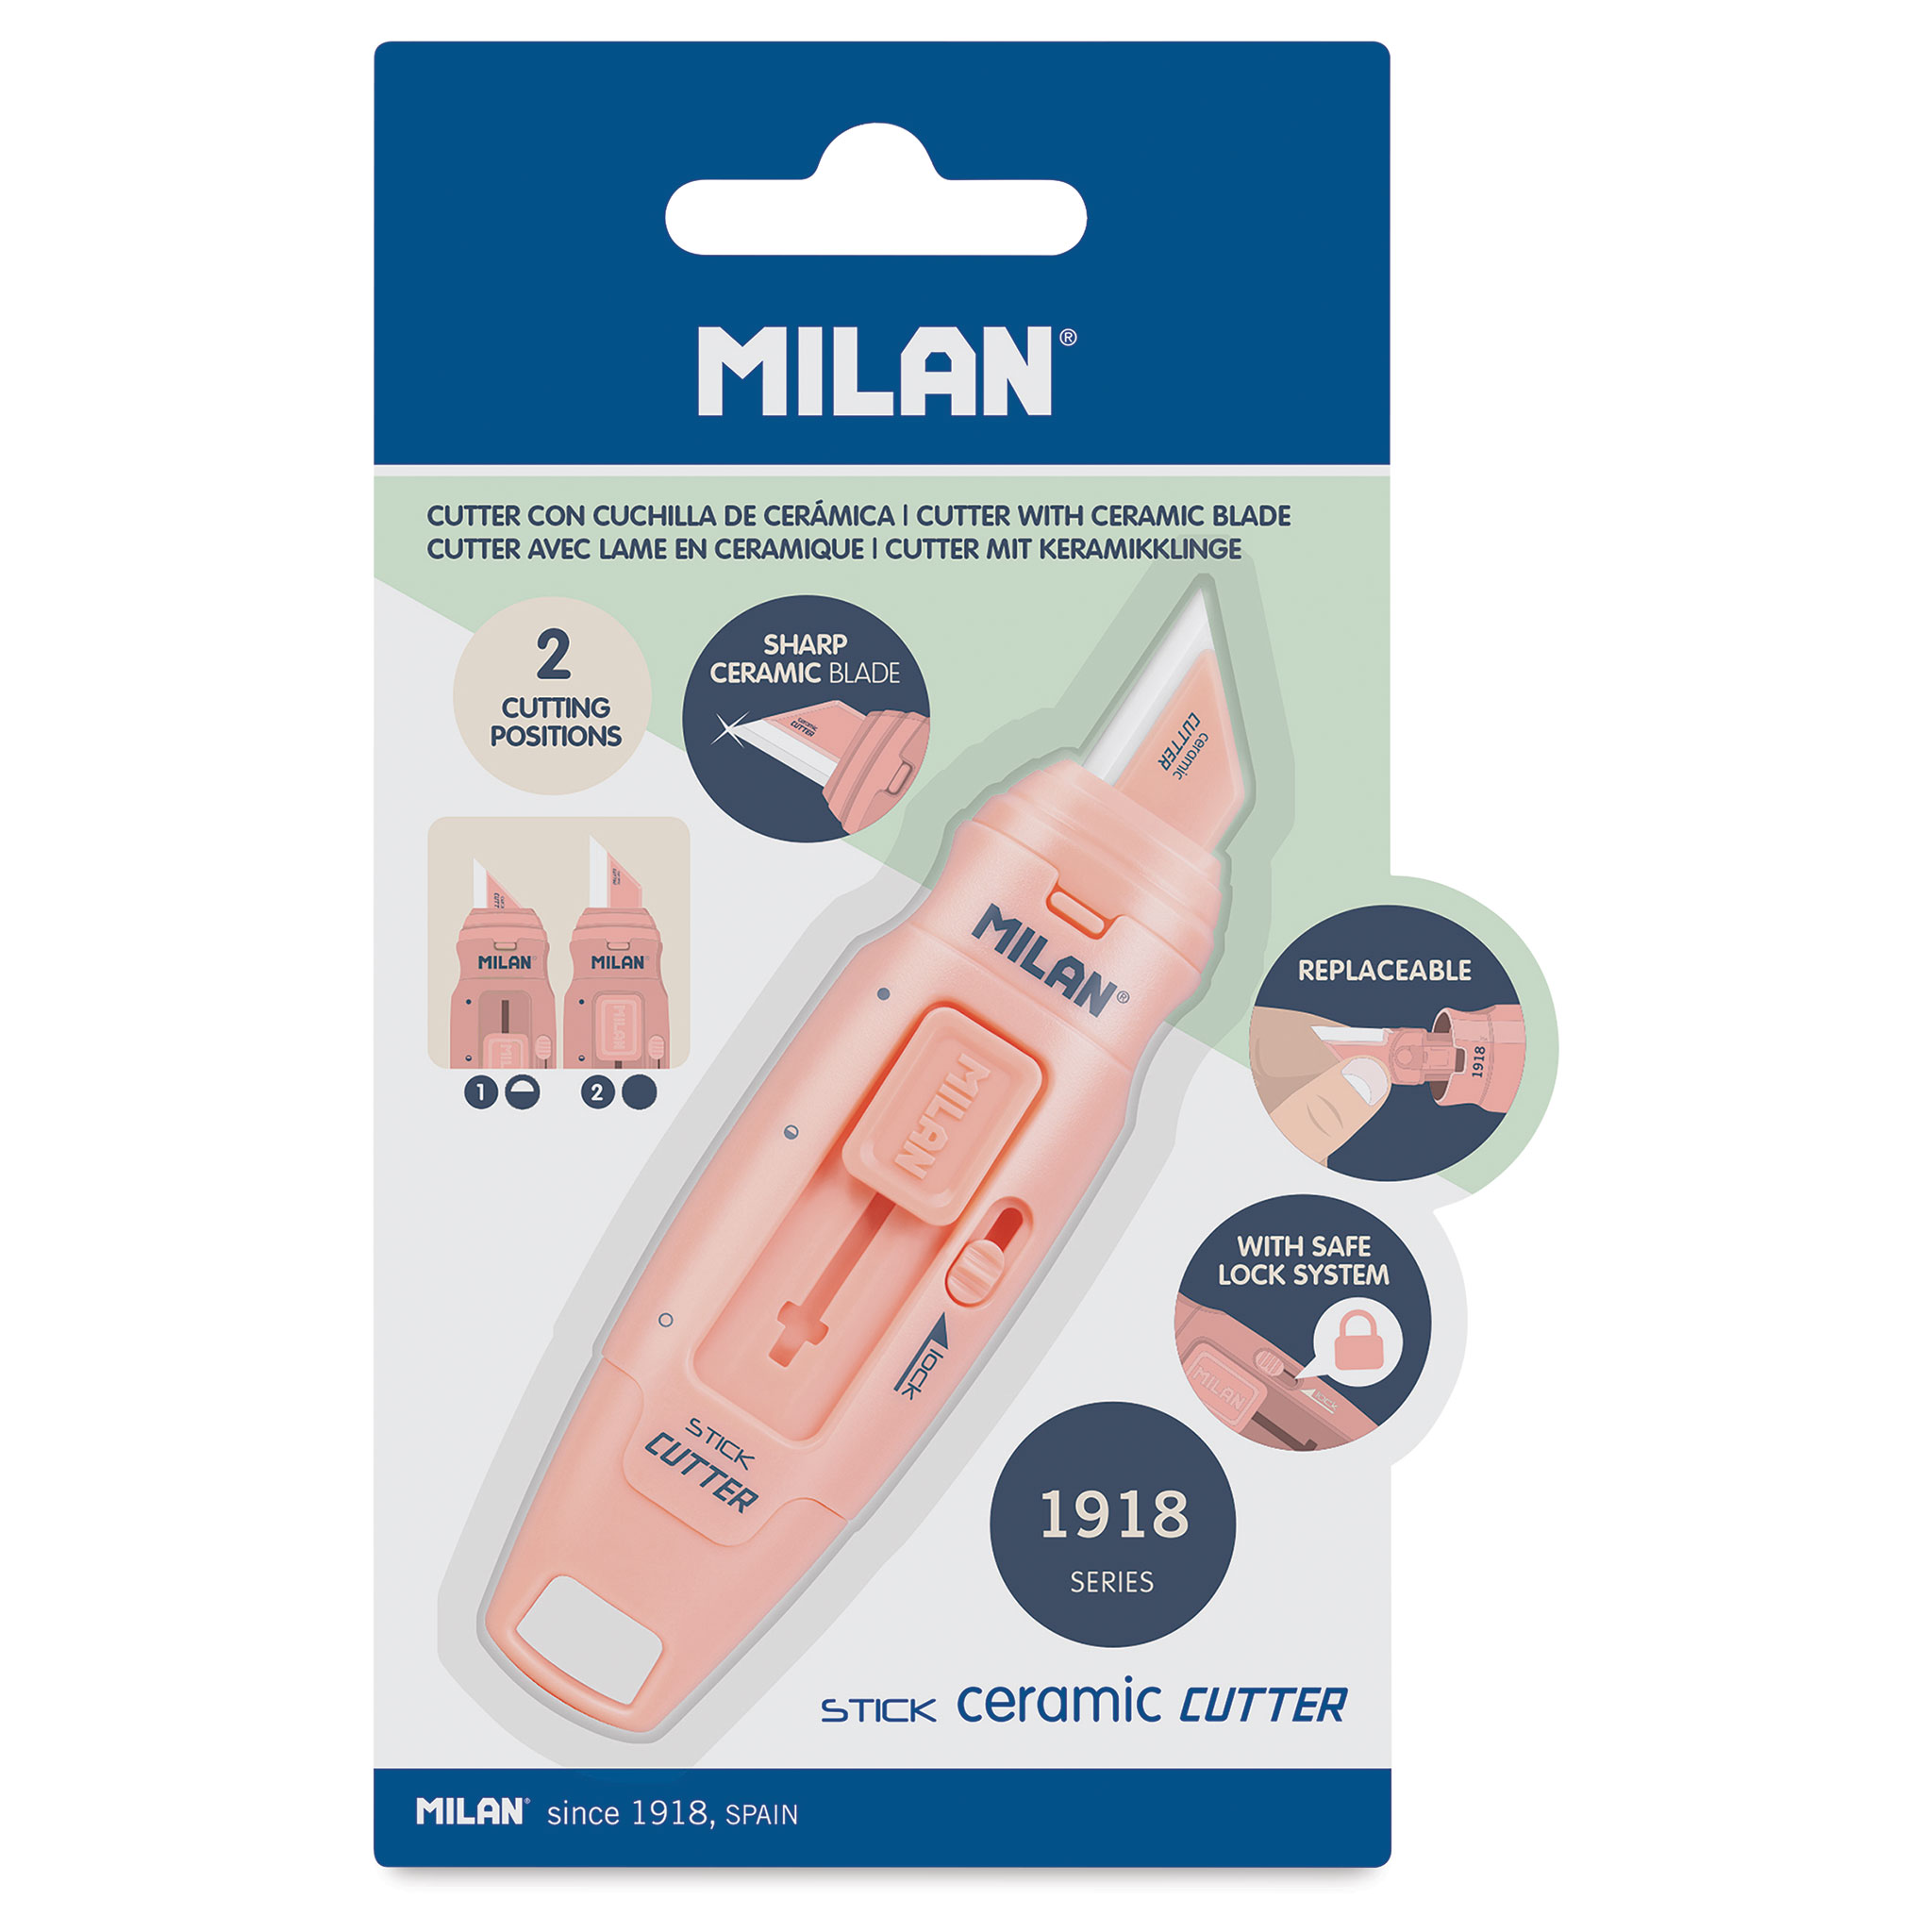 Milan Ceramic Cutter Overview 